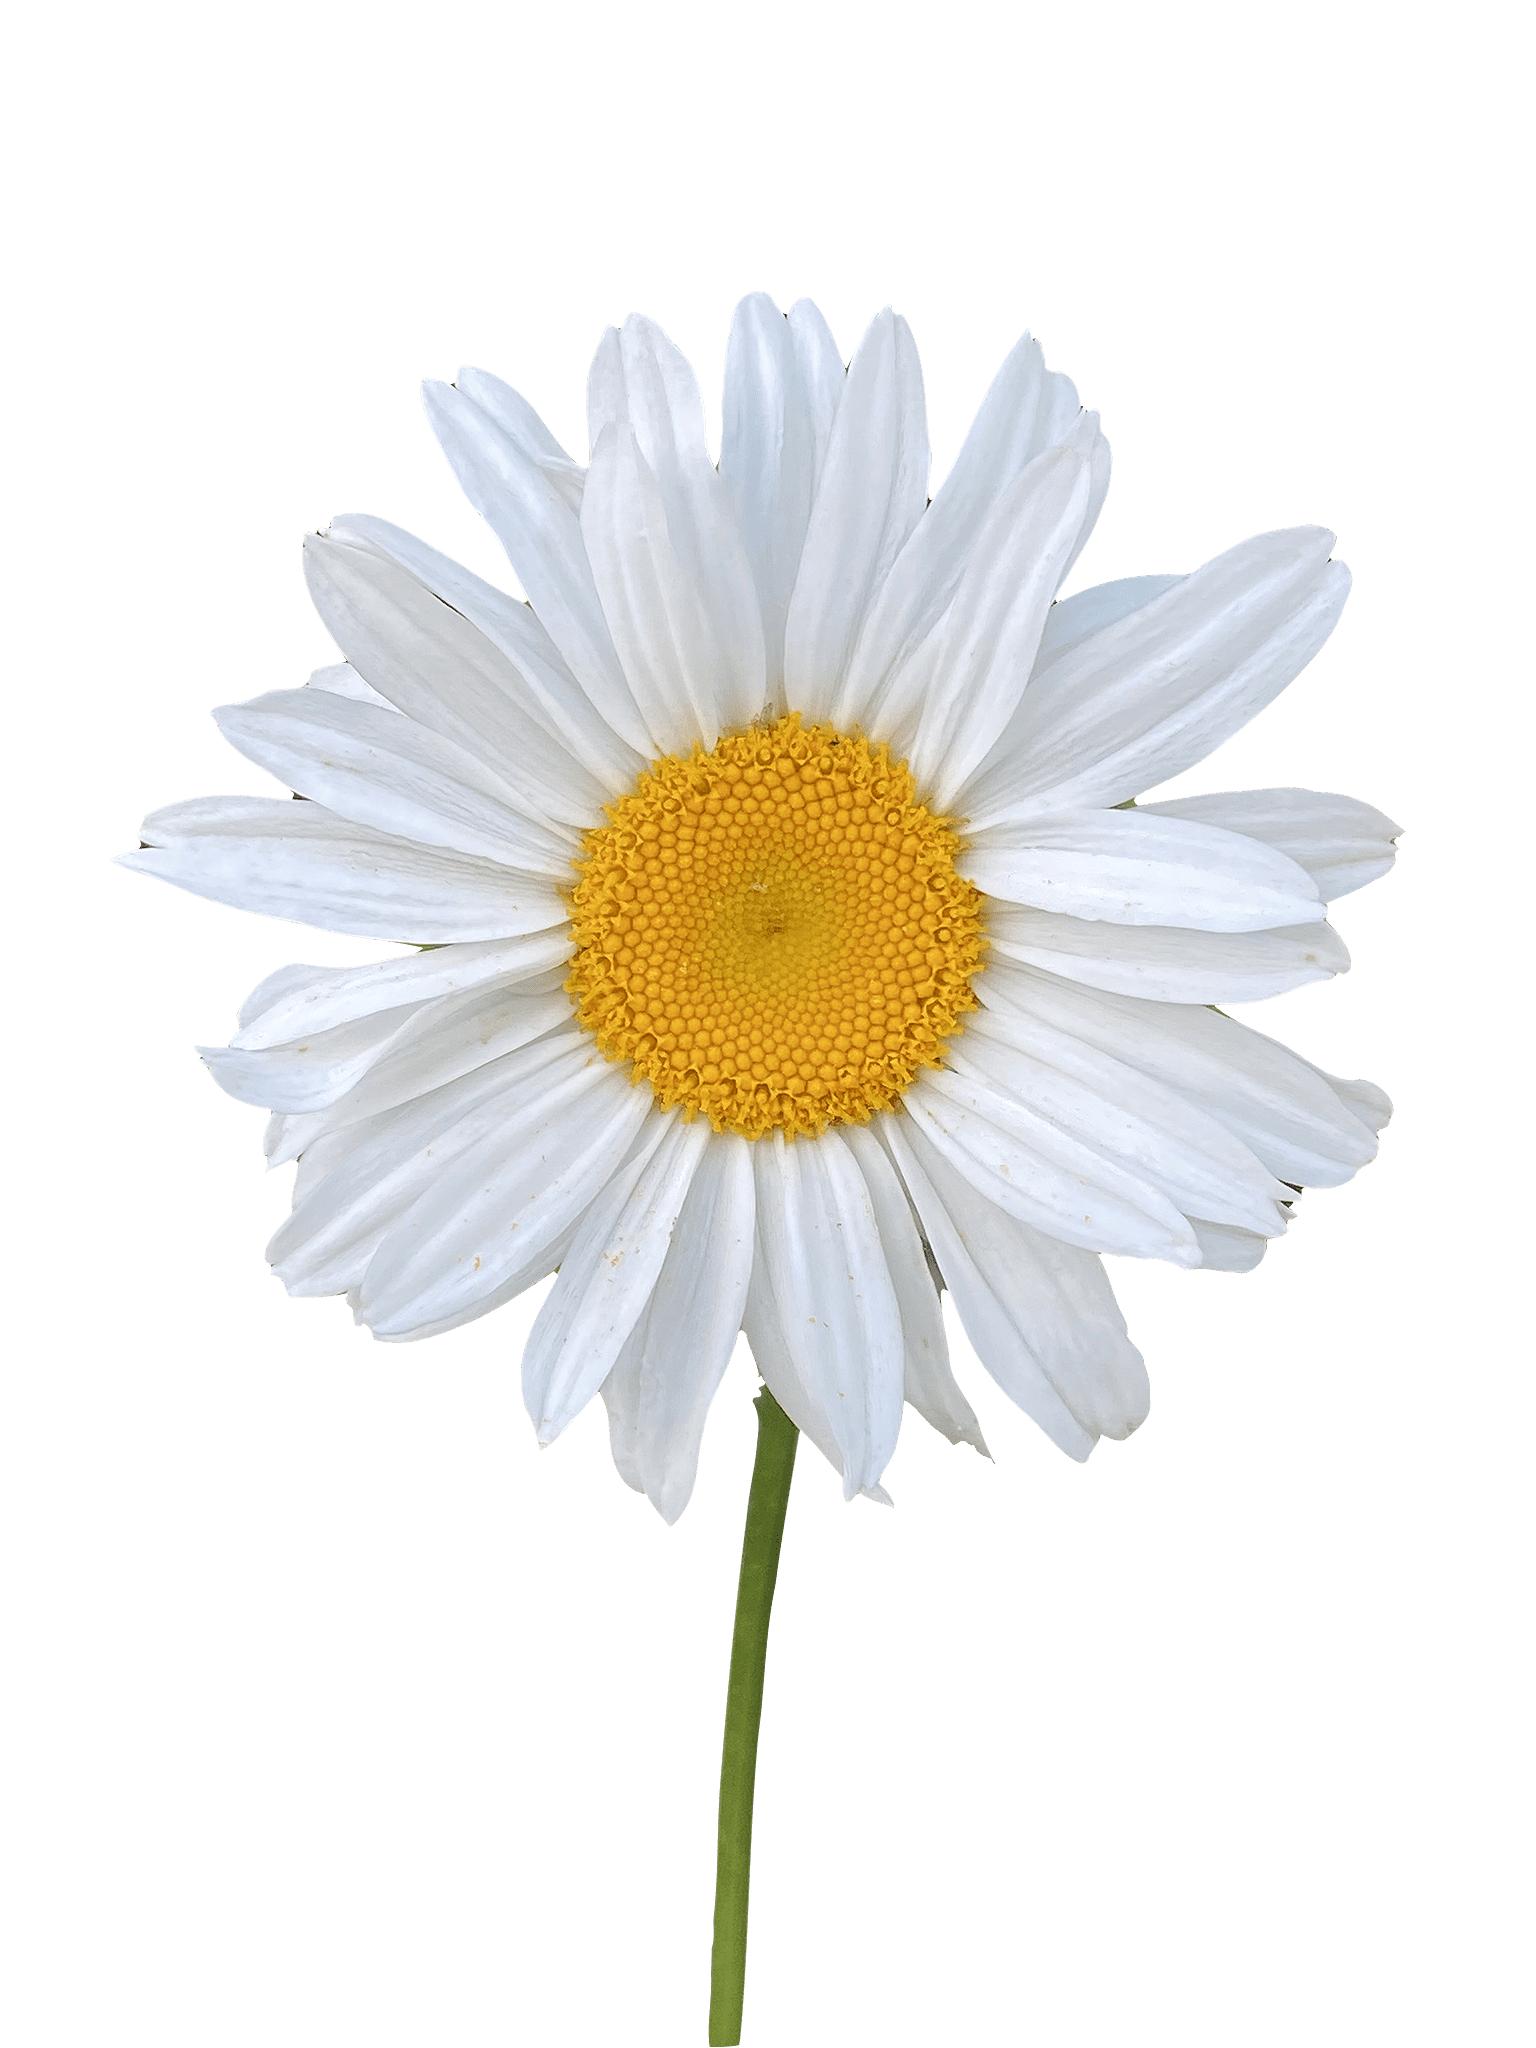 Decorative image of a Daisy